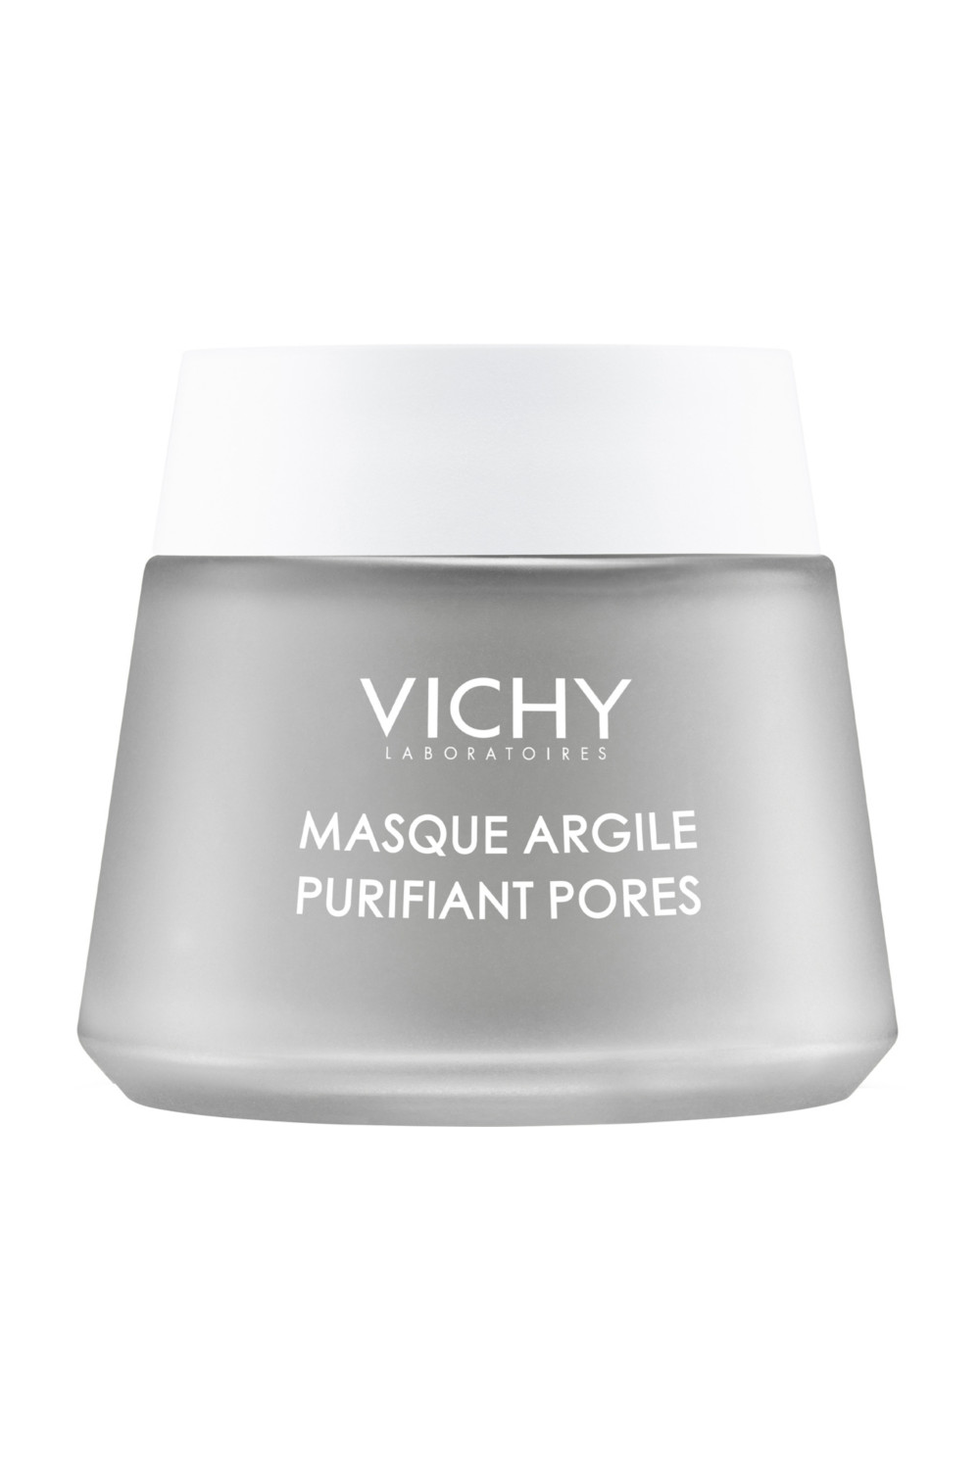 Vichy Pore Purifying Clay Face Mask